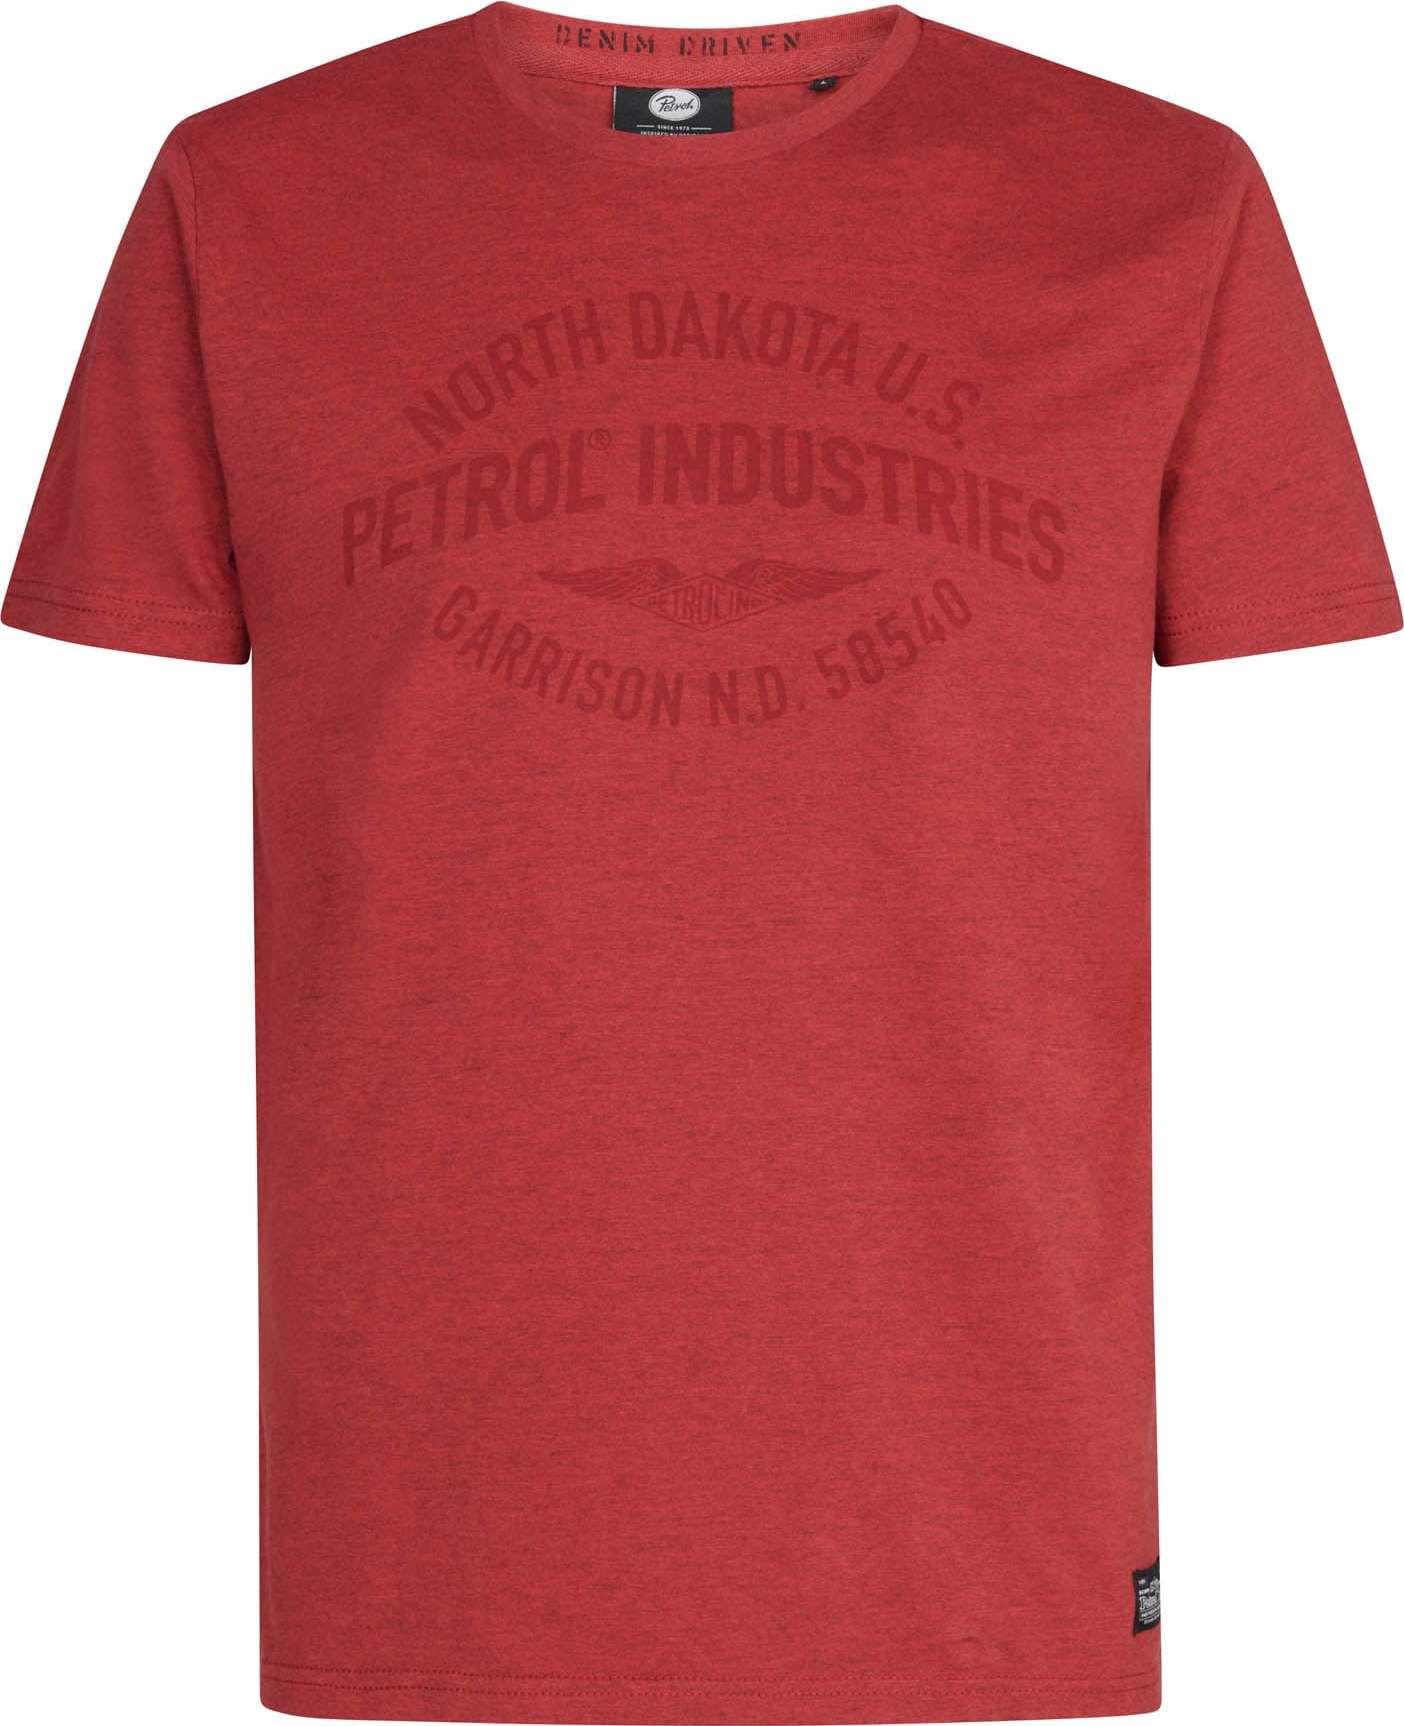 Tričko Petrol Industries červená